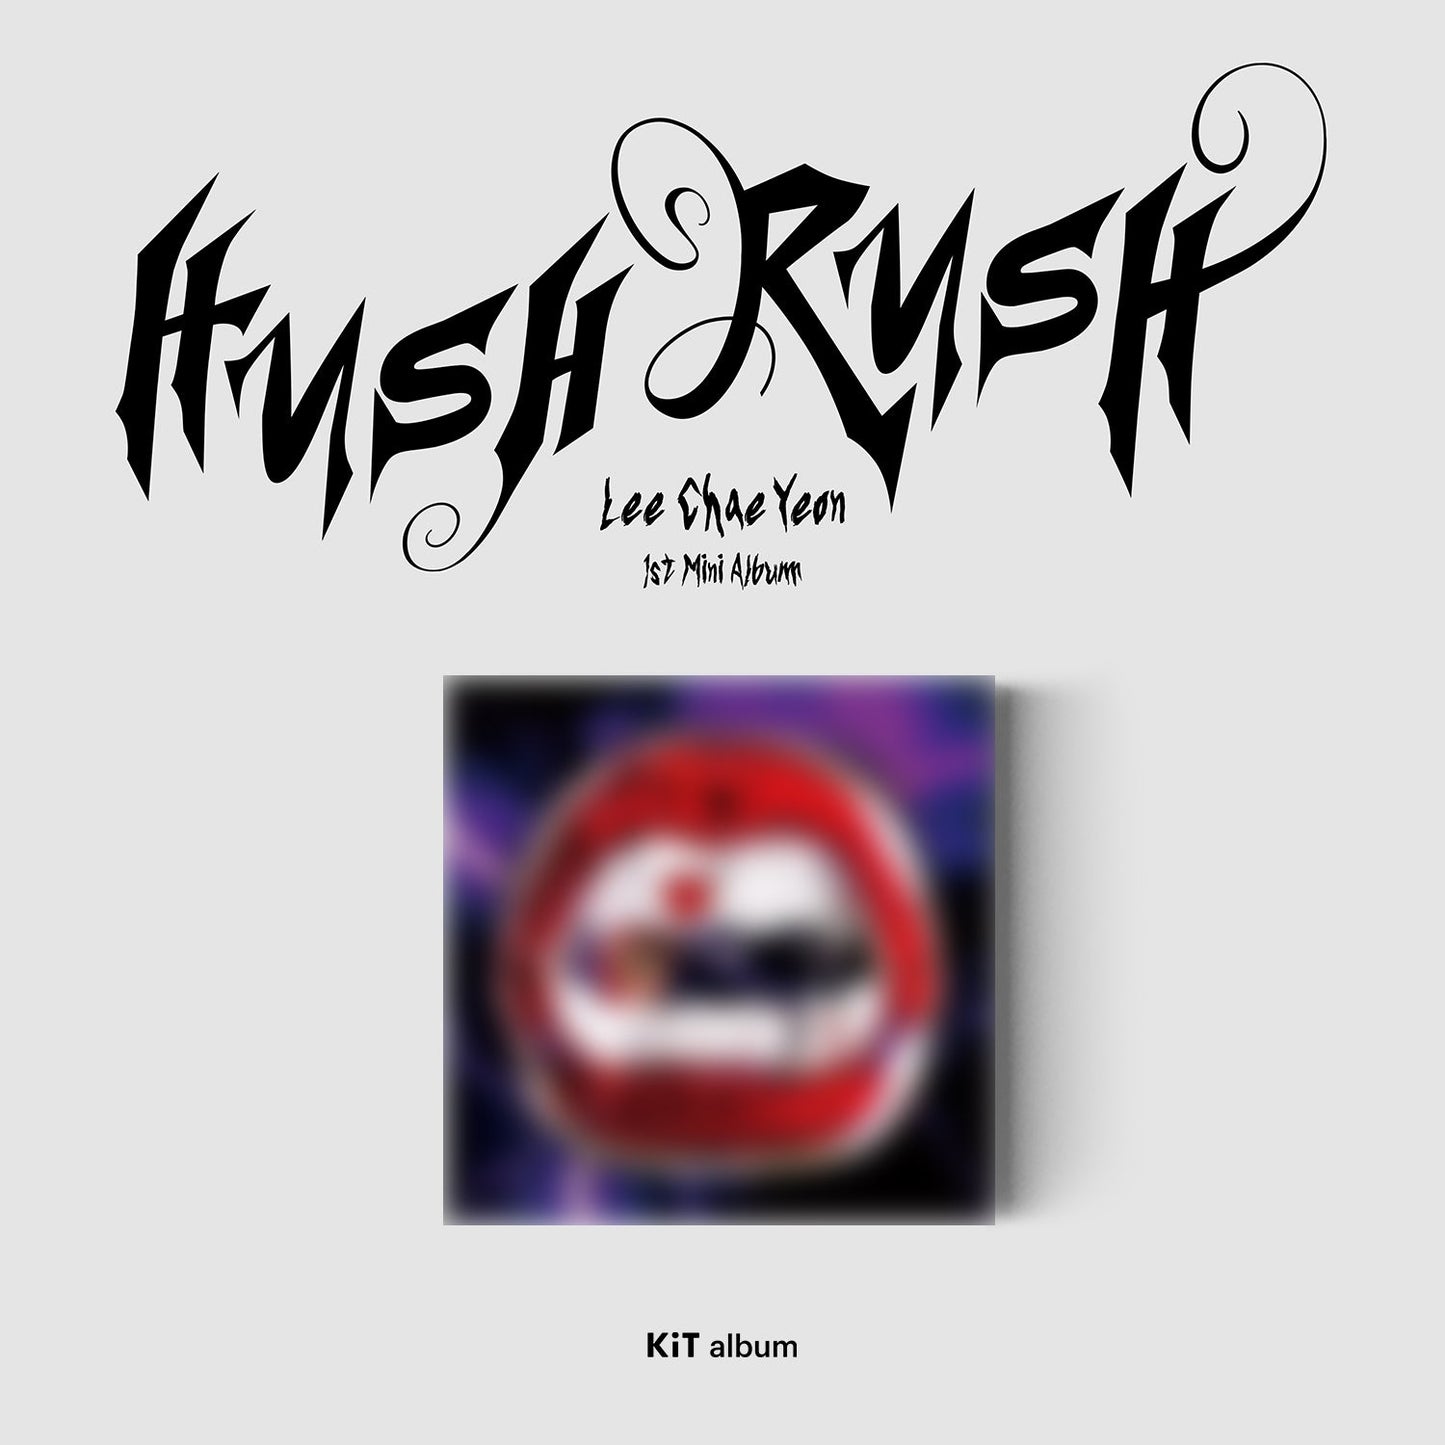 LEE CHAEYEON 1ST MINI ALBUM 'HUSH RUSH' (KIHNO KIT) COVER